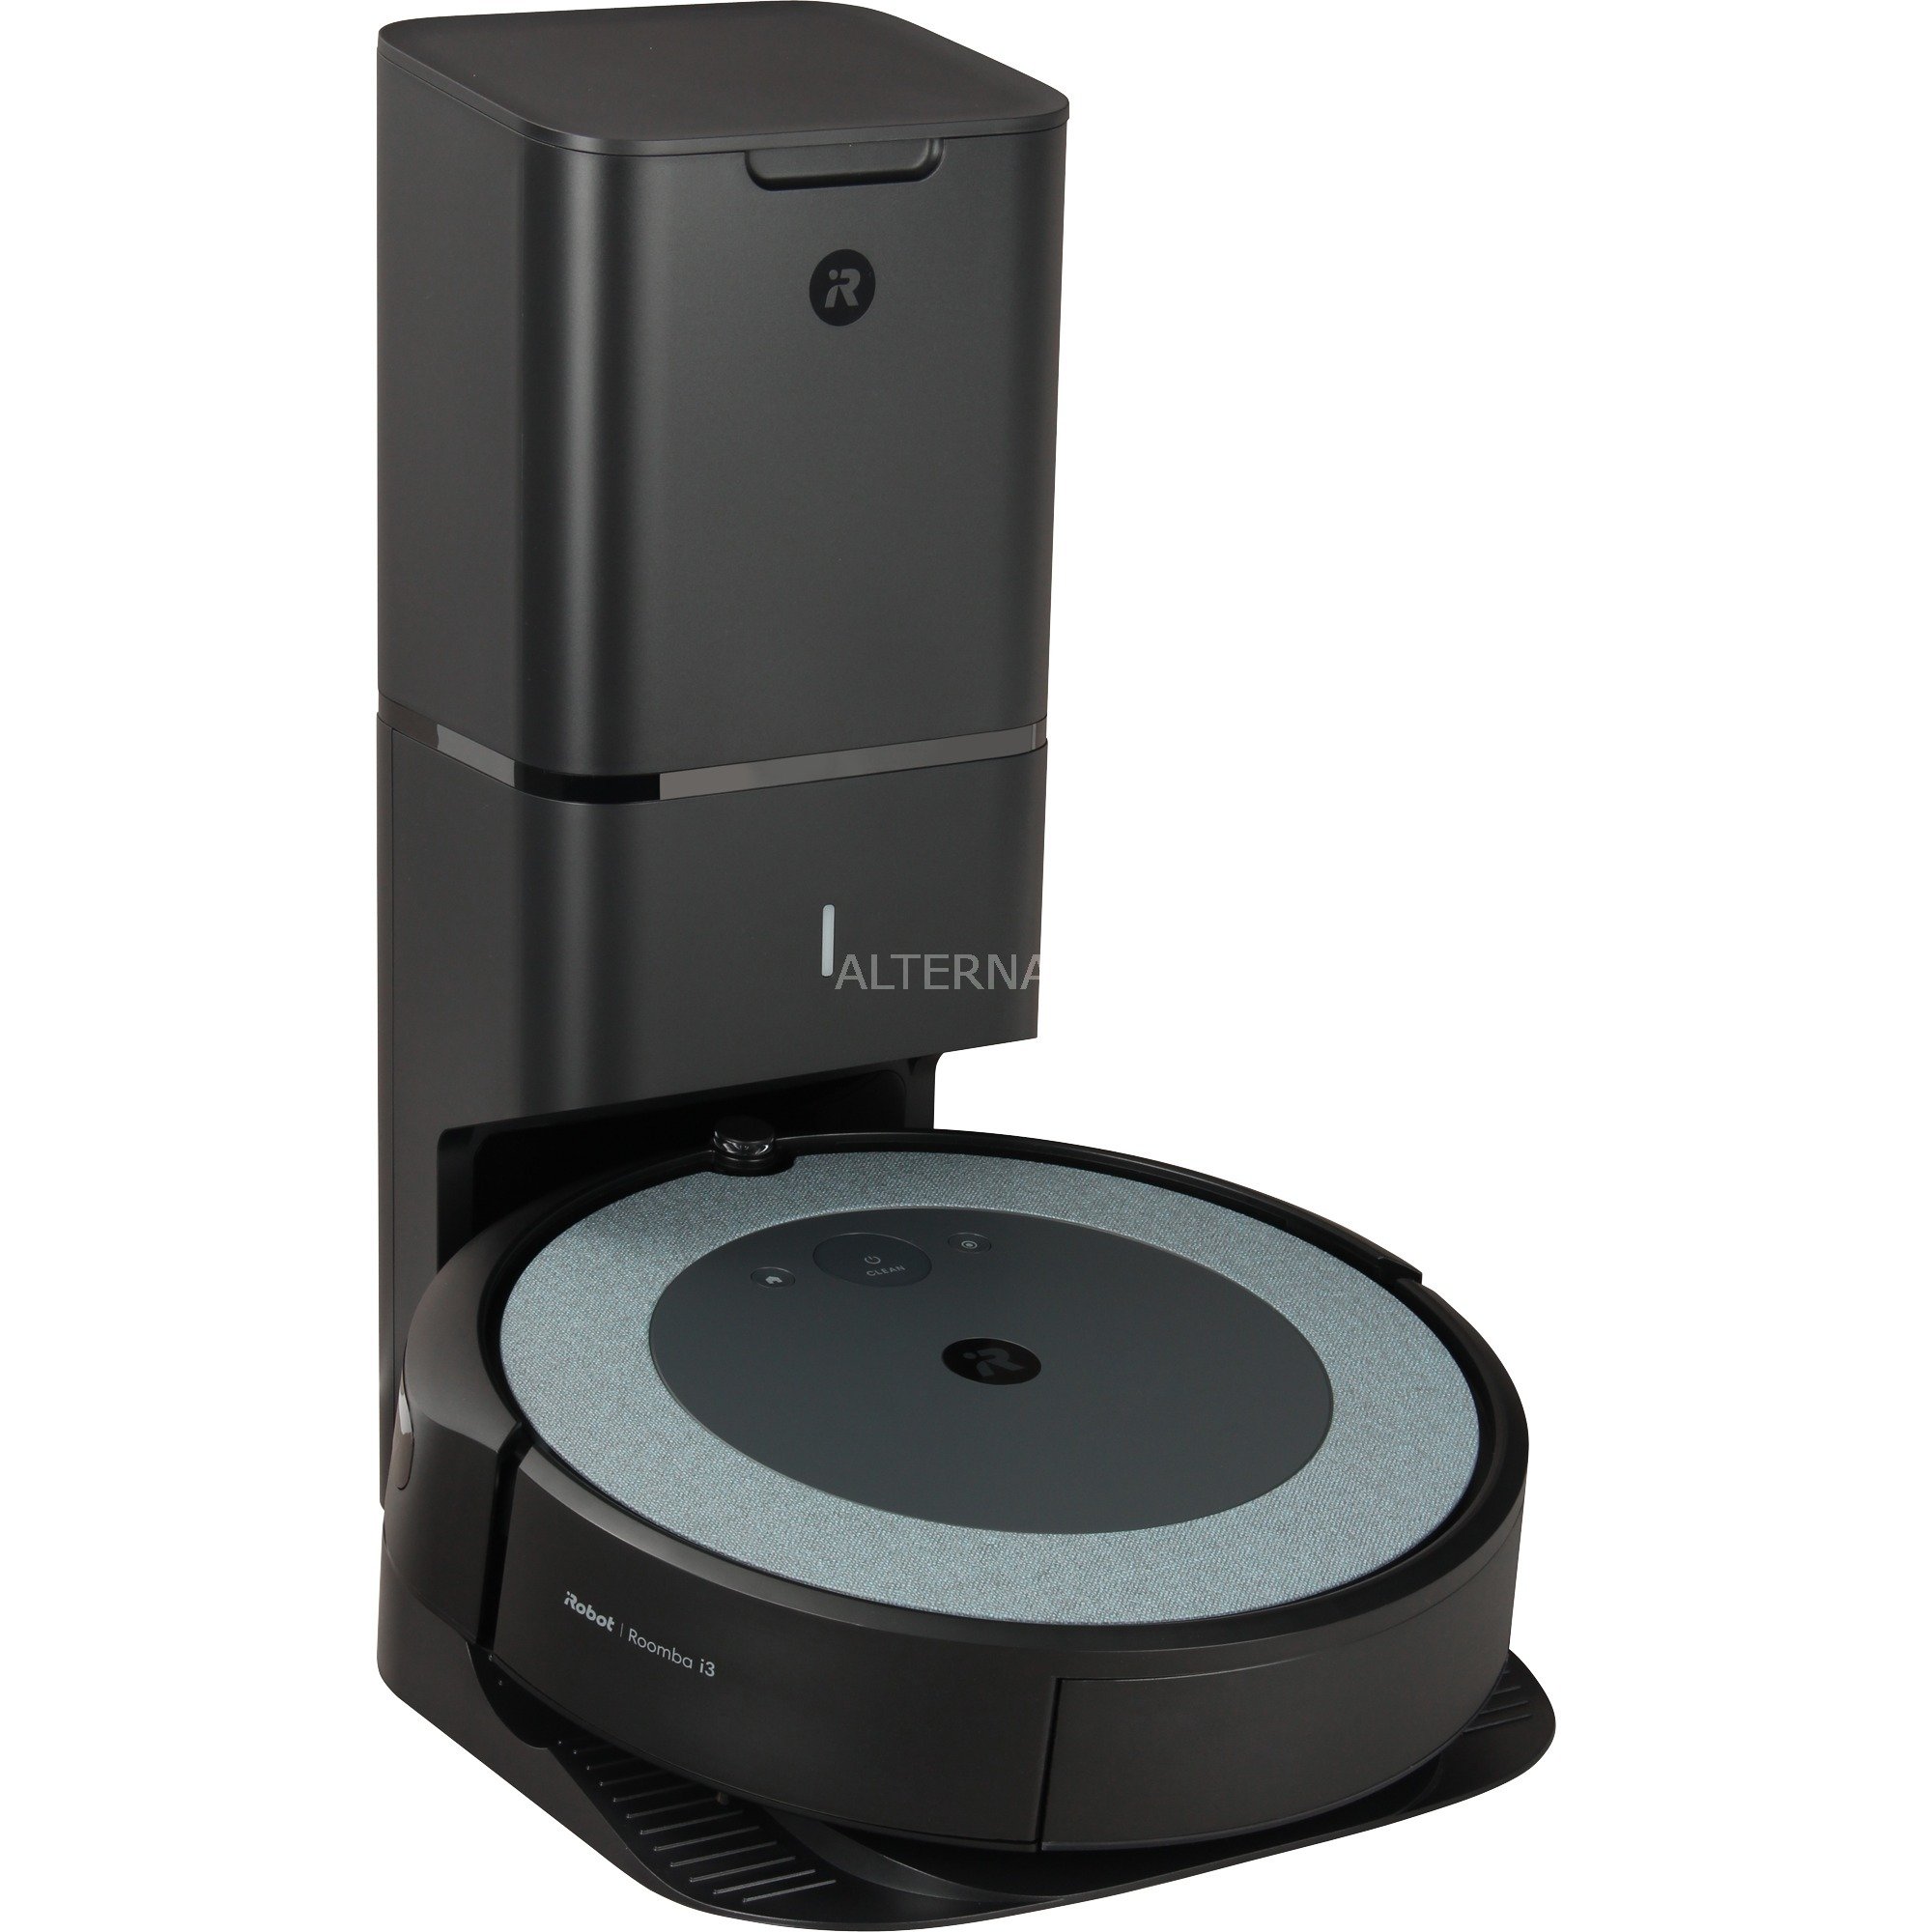 Image of Alternate - Roomba i3+ (3552), Saugroboter online einkaufen bei Alternate